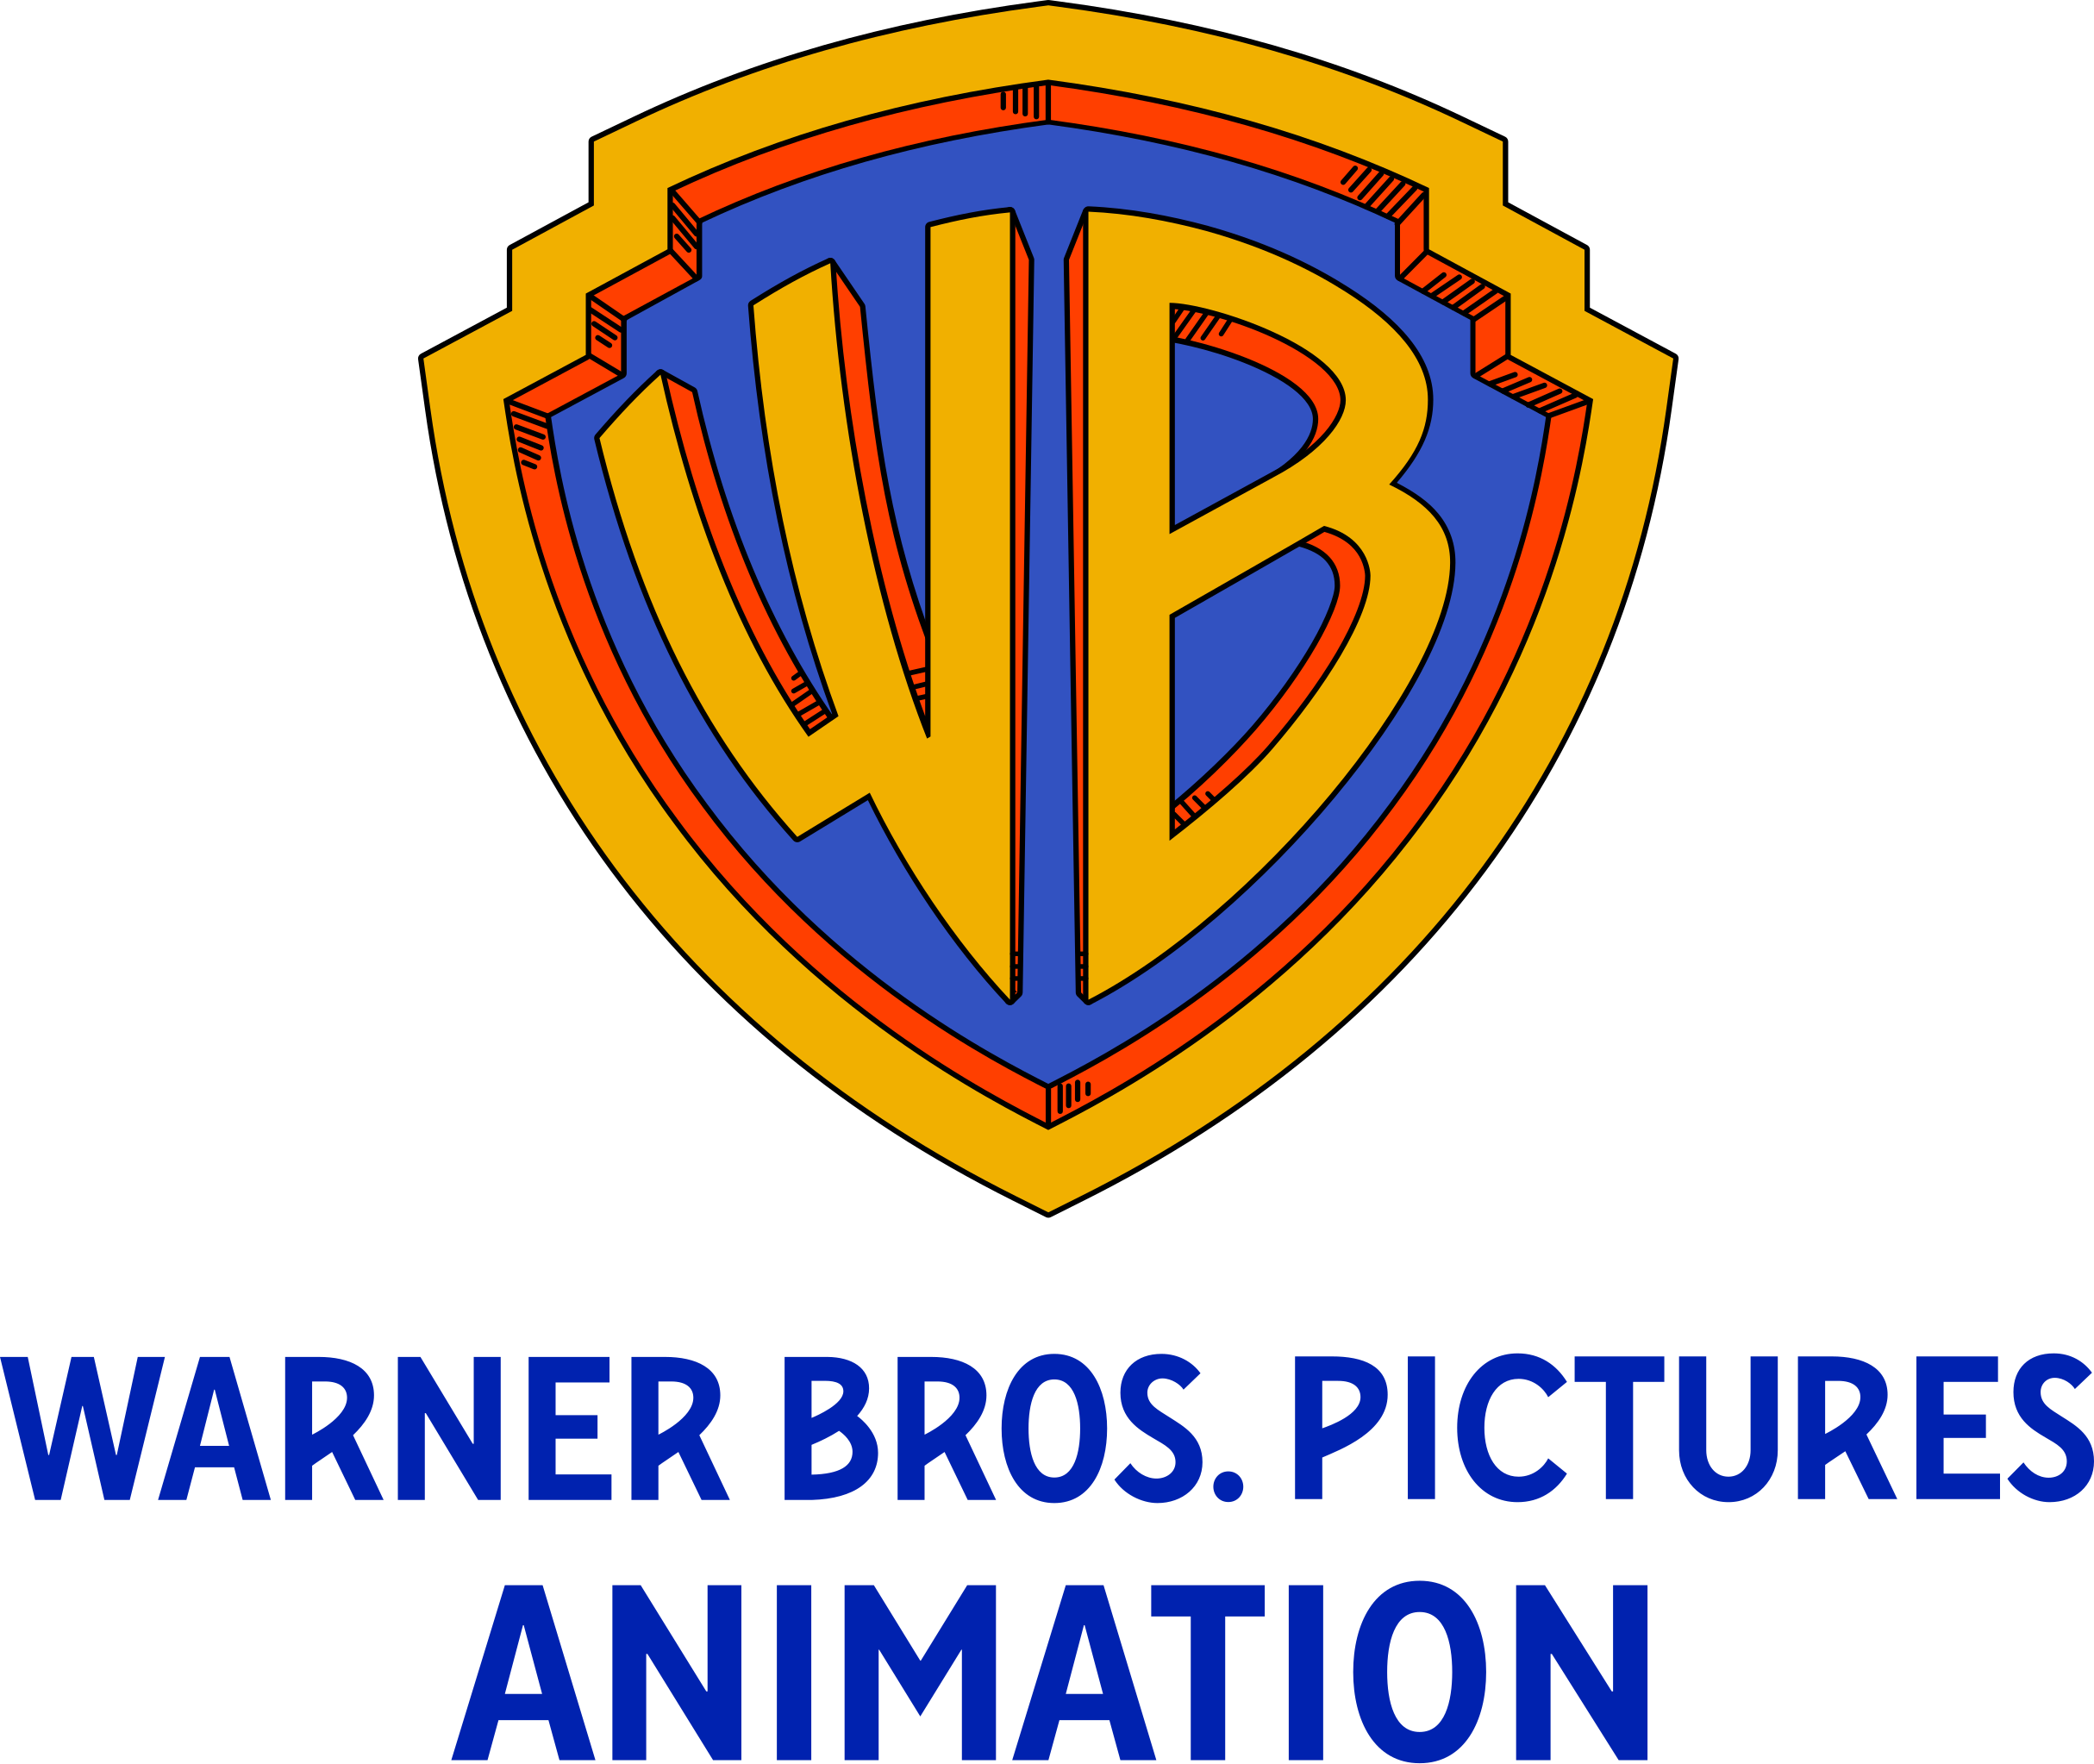 File:Warner Bros. Pictures Animation logo.svg - Wikipedia